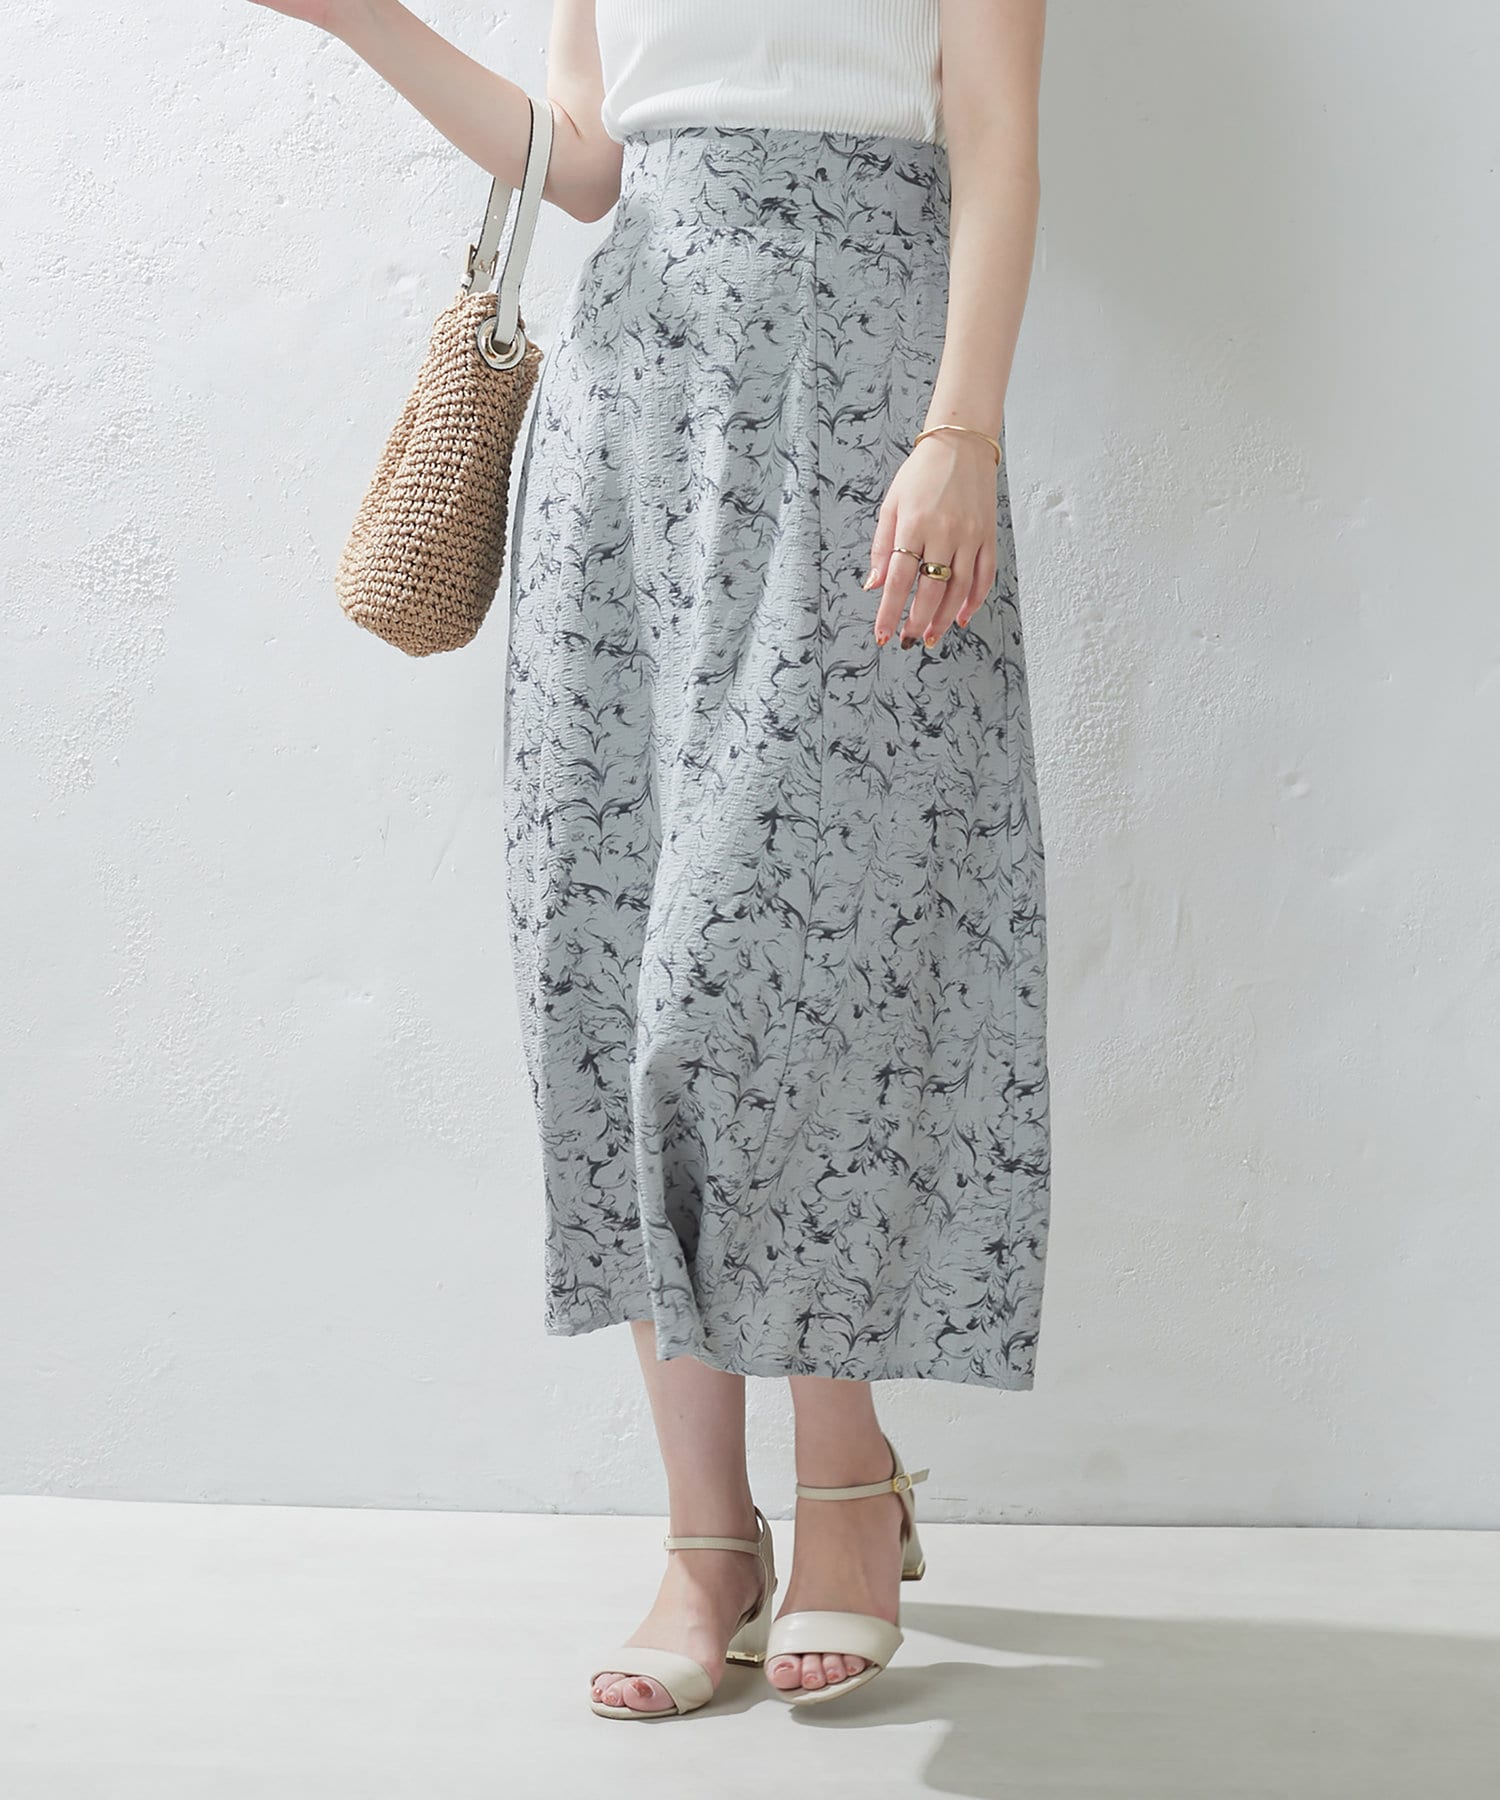 natural couture(ナチュラルクチュール) ニュアンスアート柄スカート